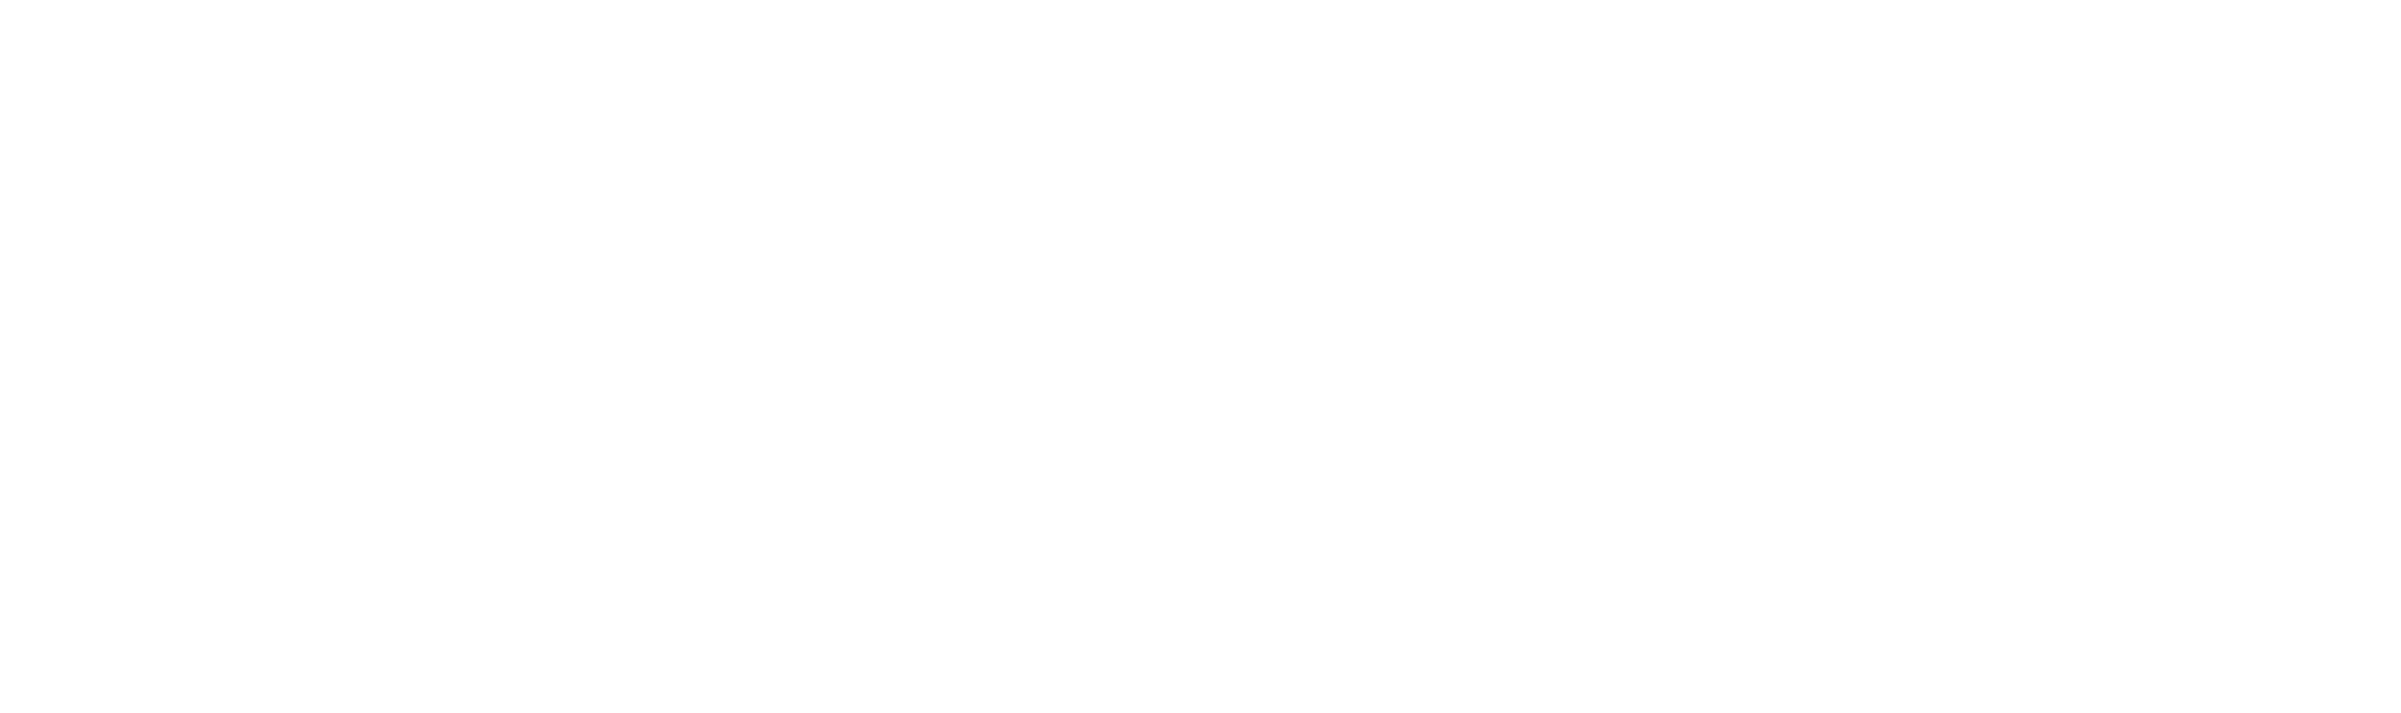 Sole Dynamix logo.